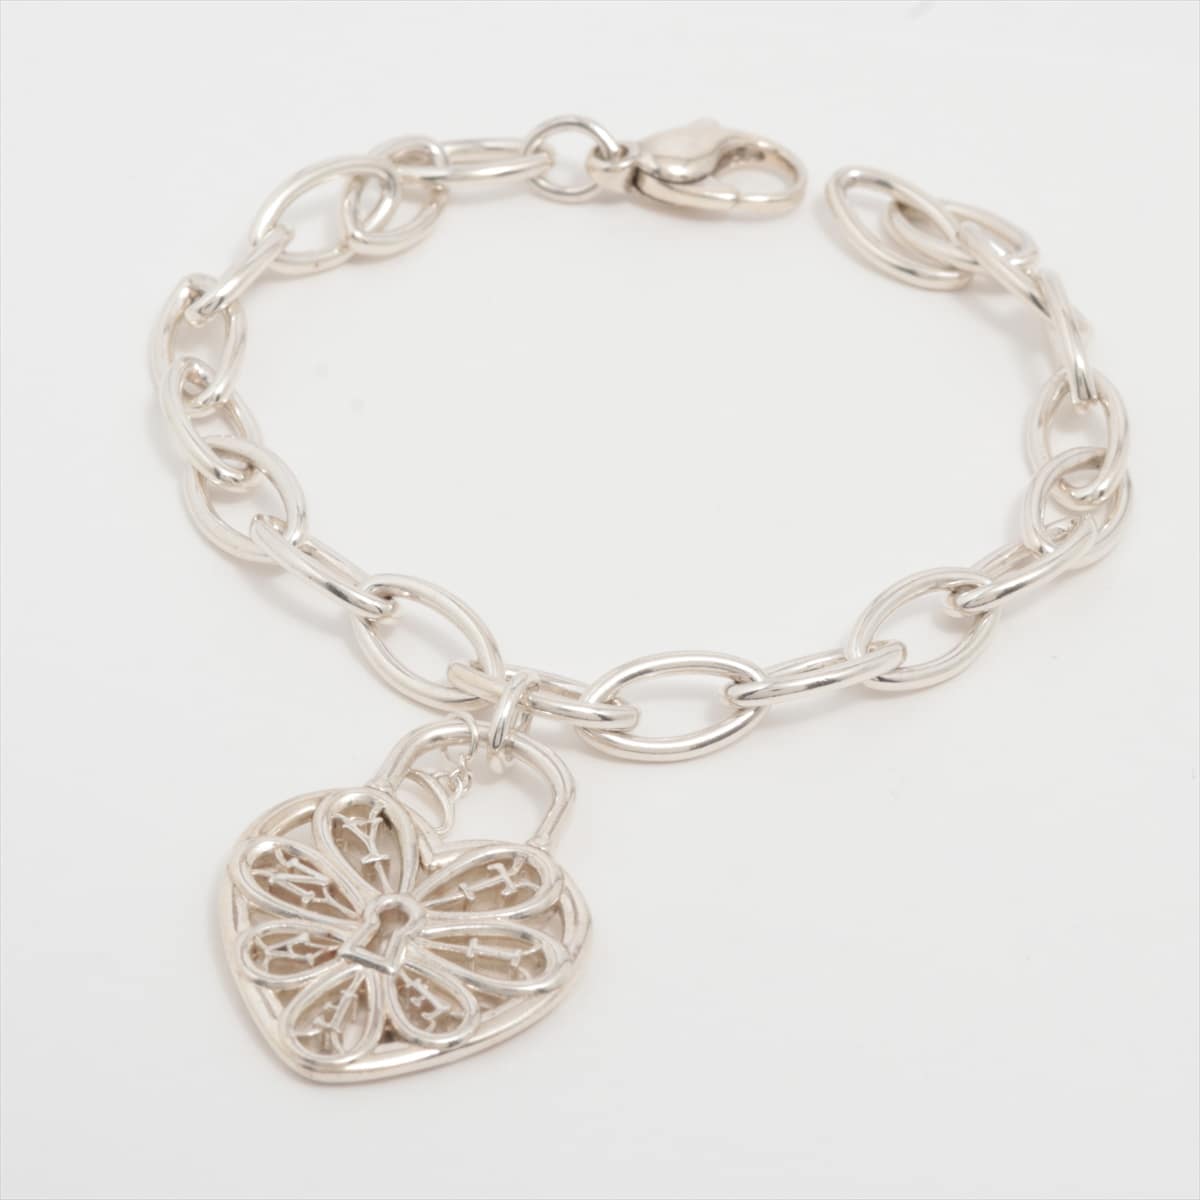 Tiffany Filigree Heart Key Bracelet 925 17.0g Silver